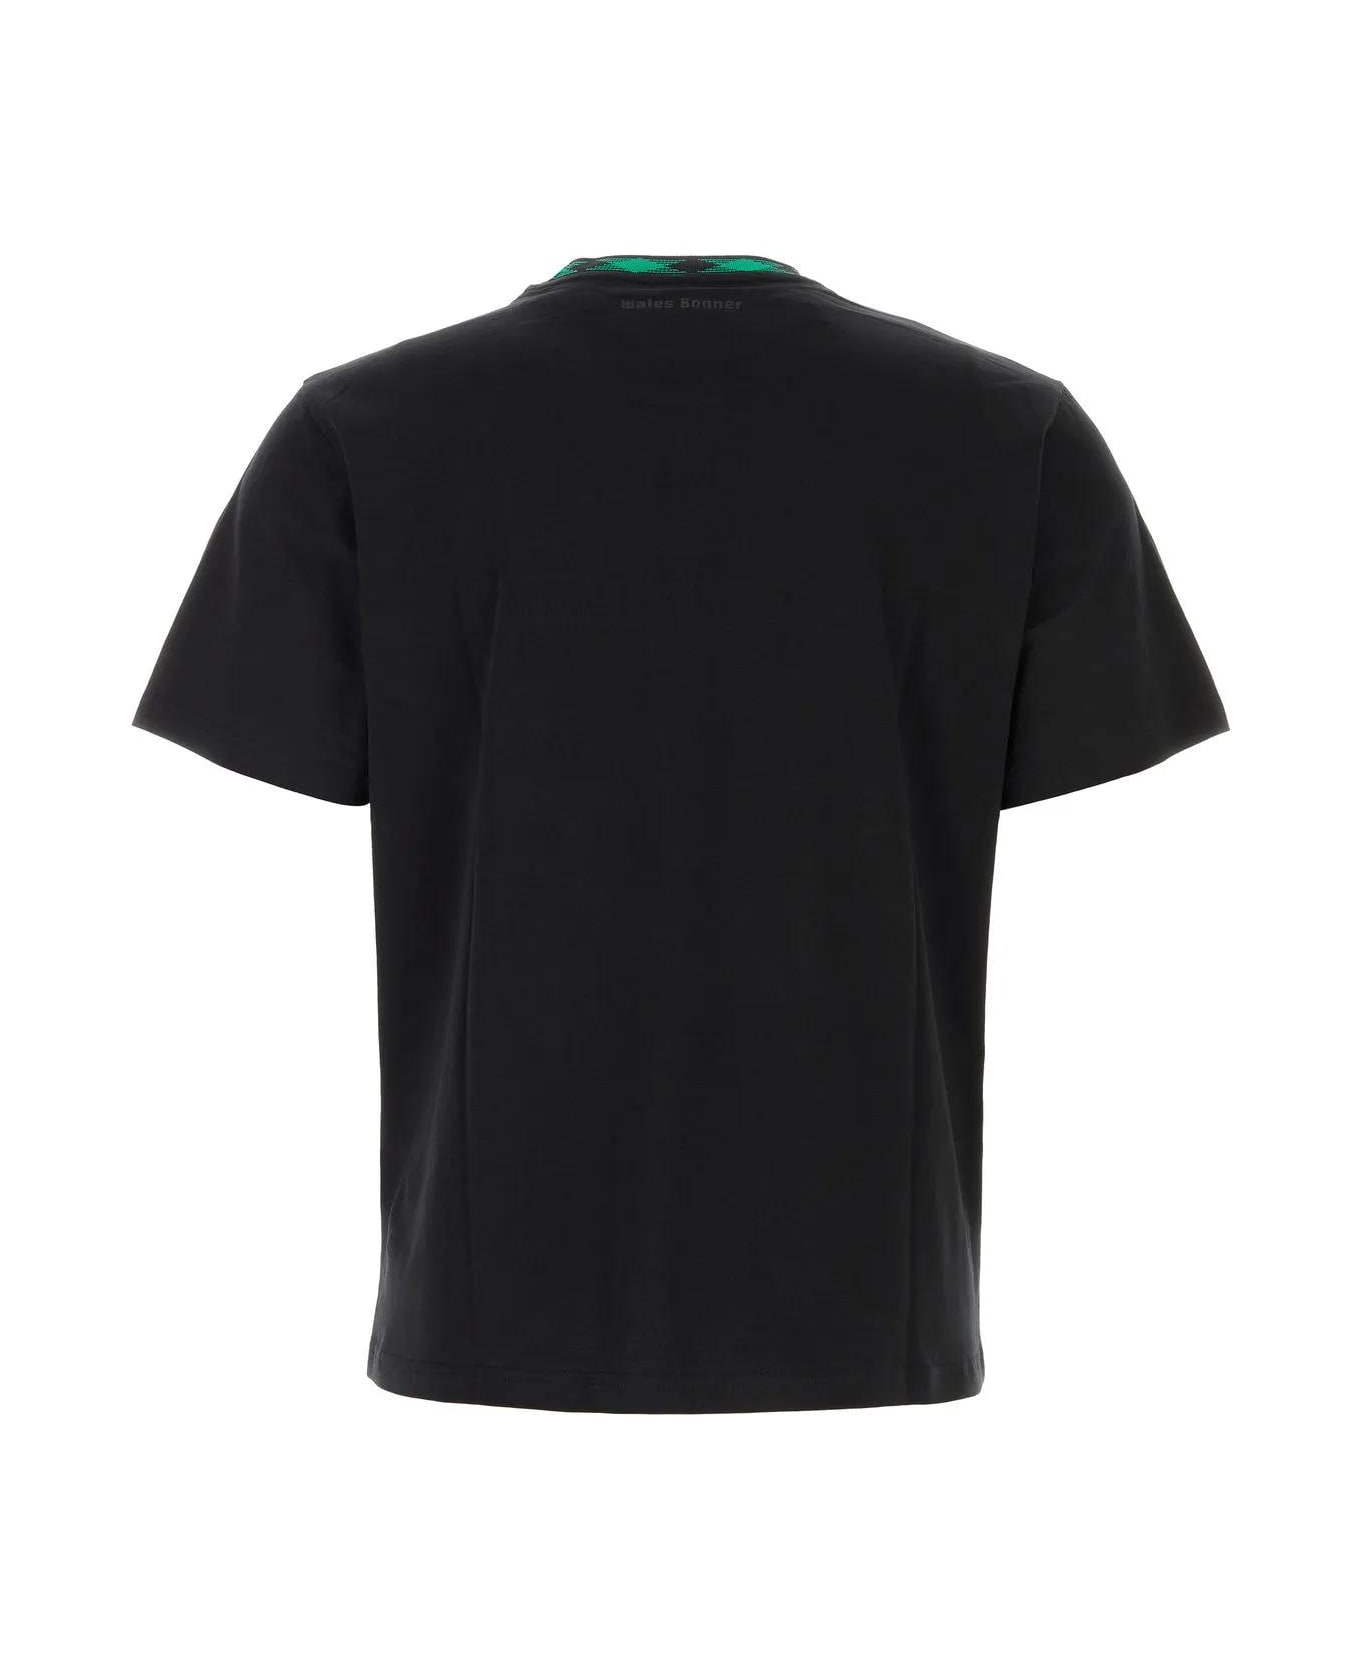 Wales Bonner Black Cotton Original T-shirt - Nero